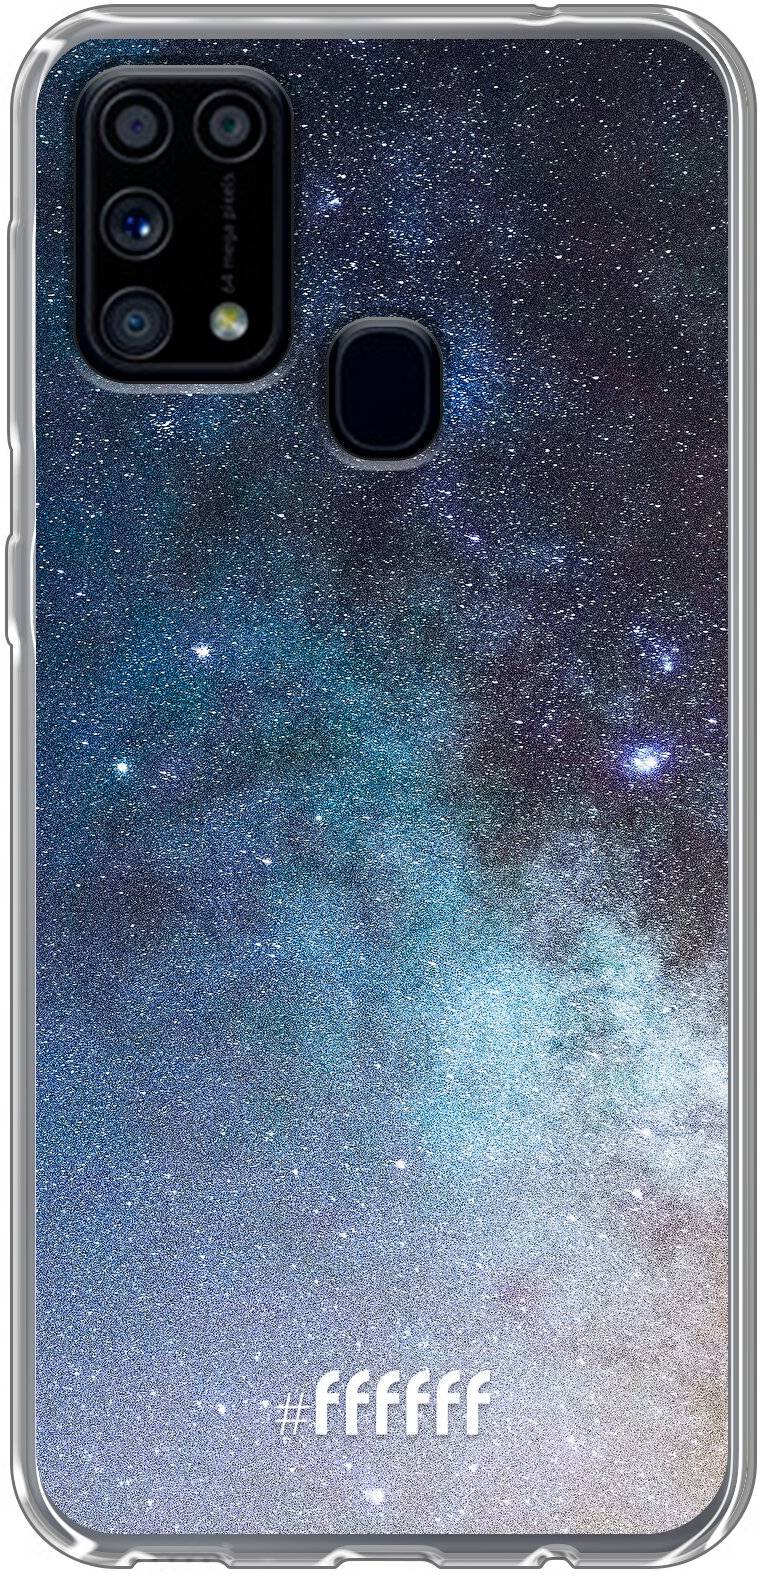 Milky Way Galaxy M31